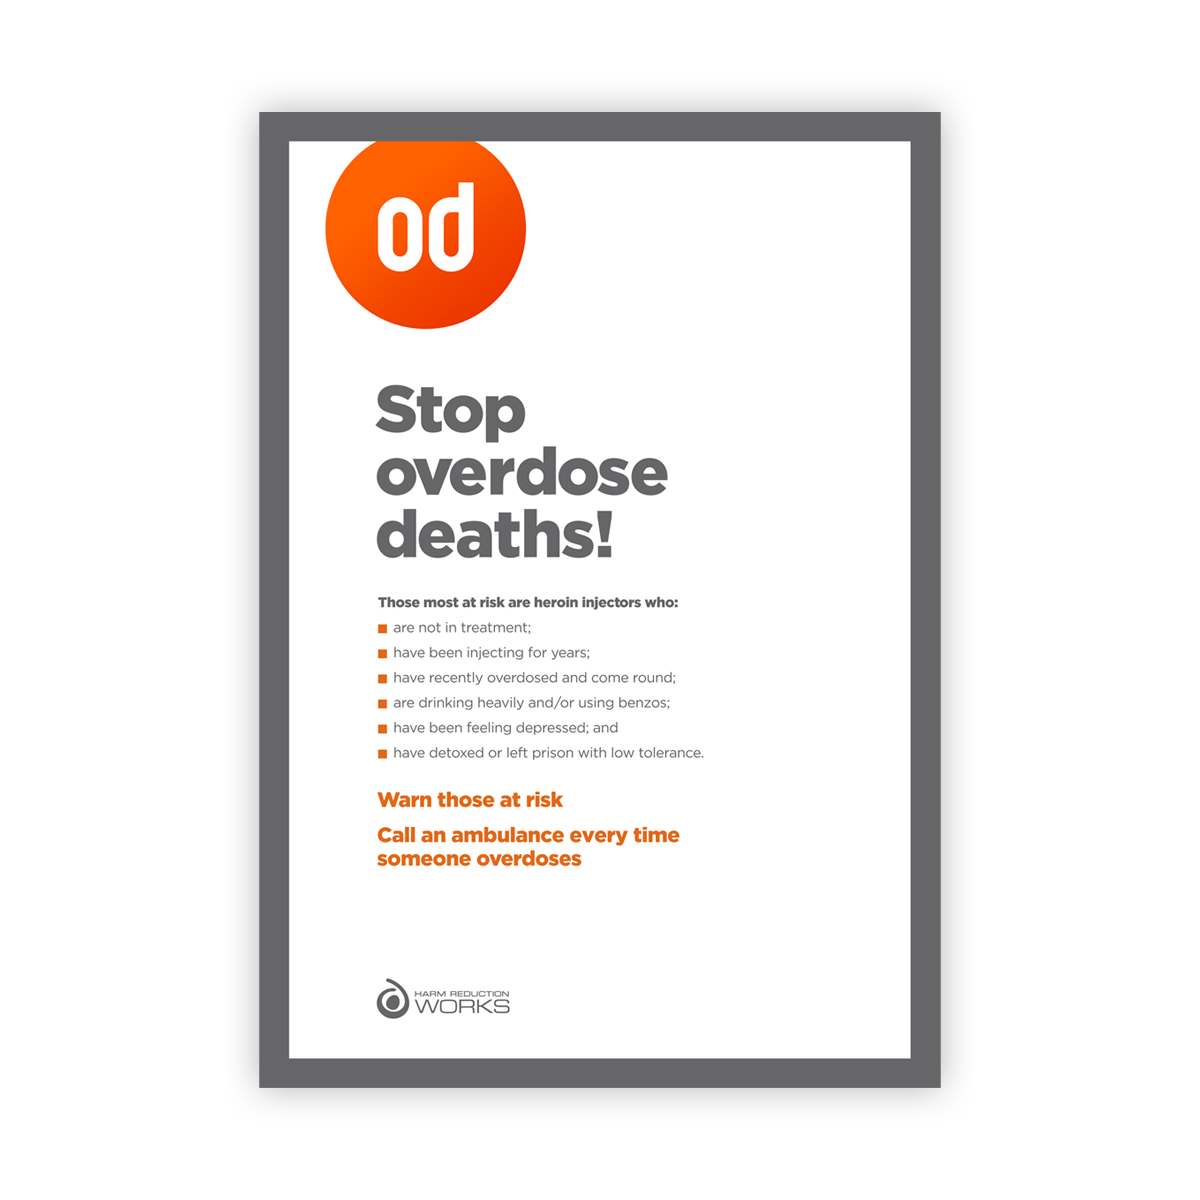 Overdose campaign: Methadone od information cards